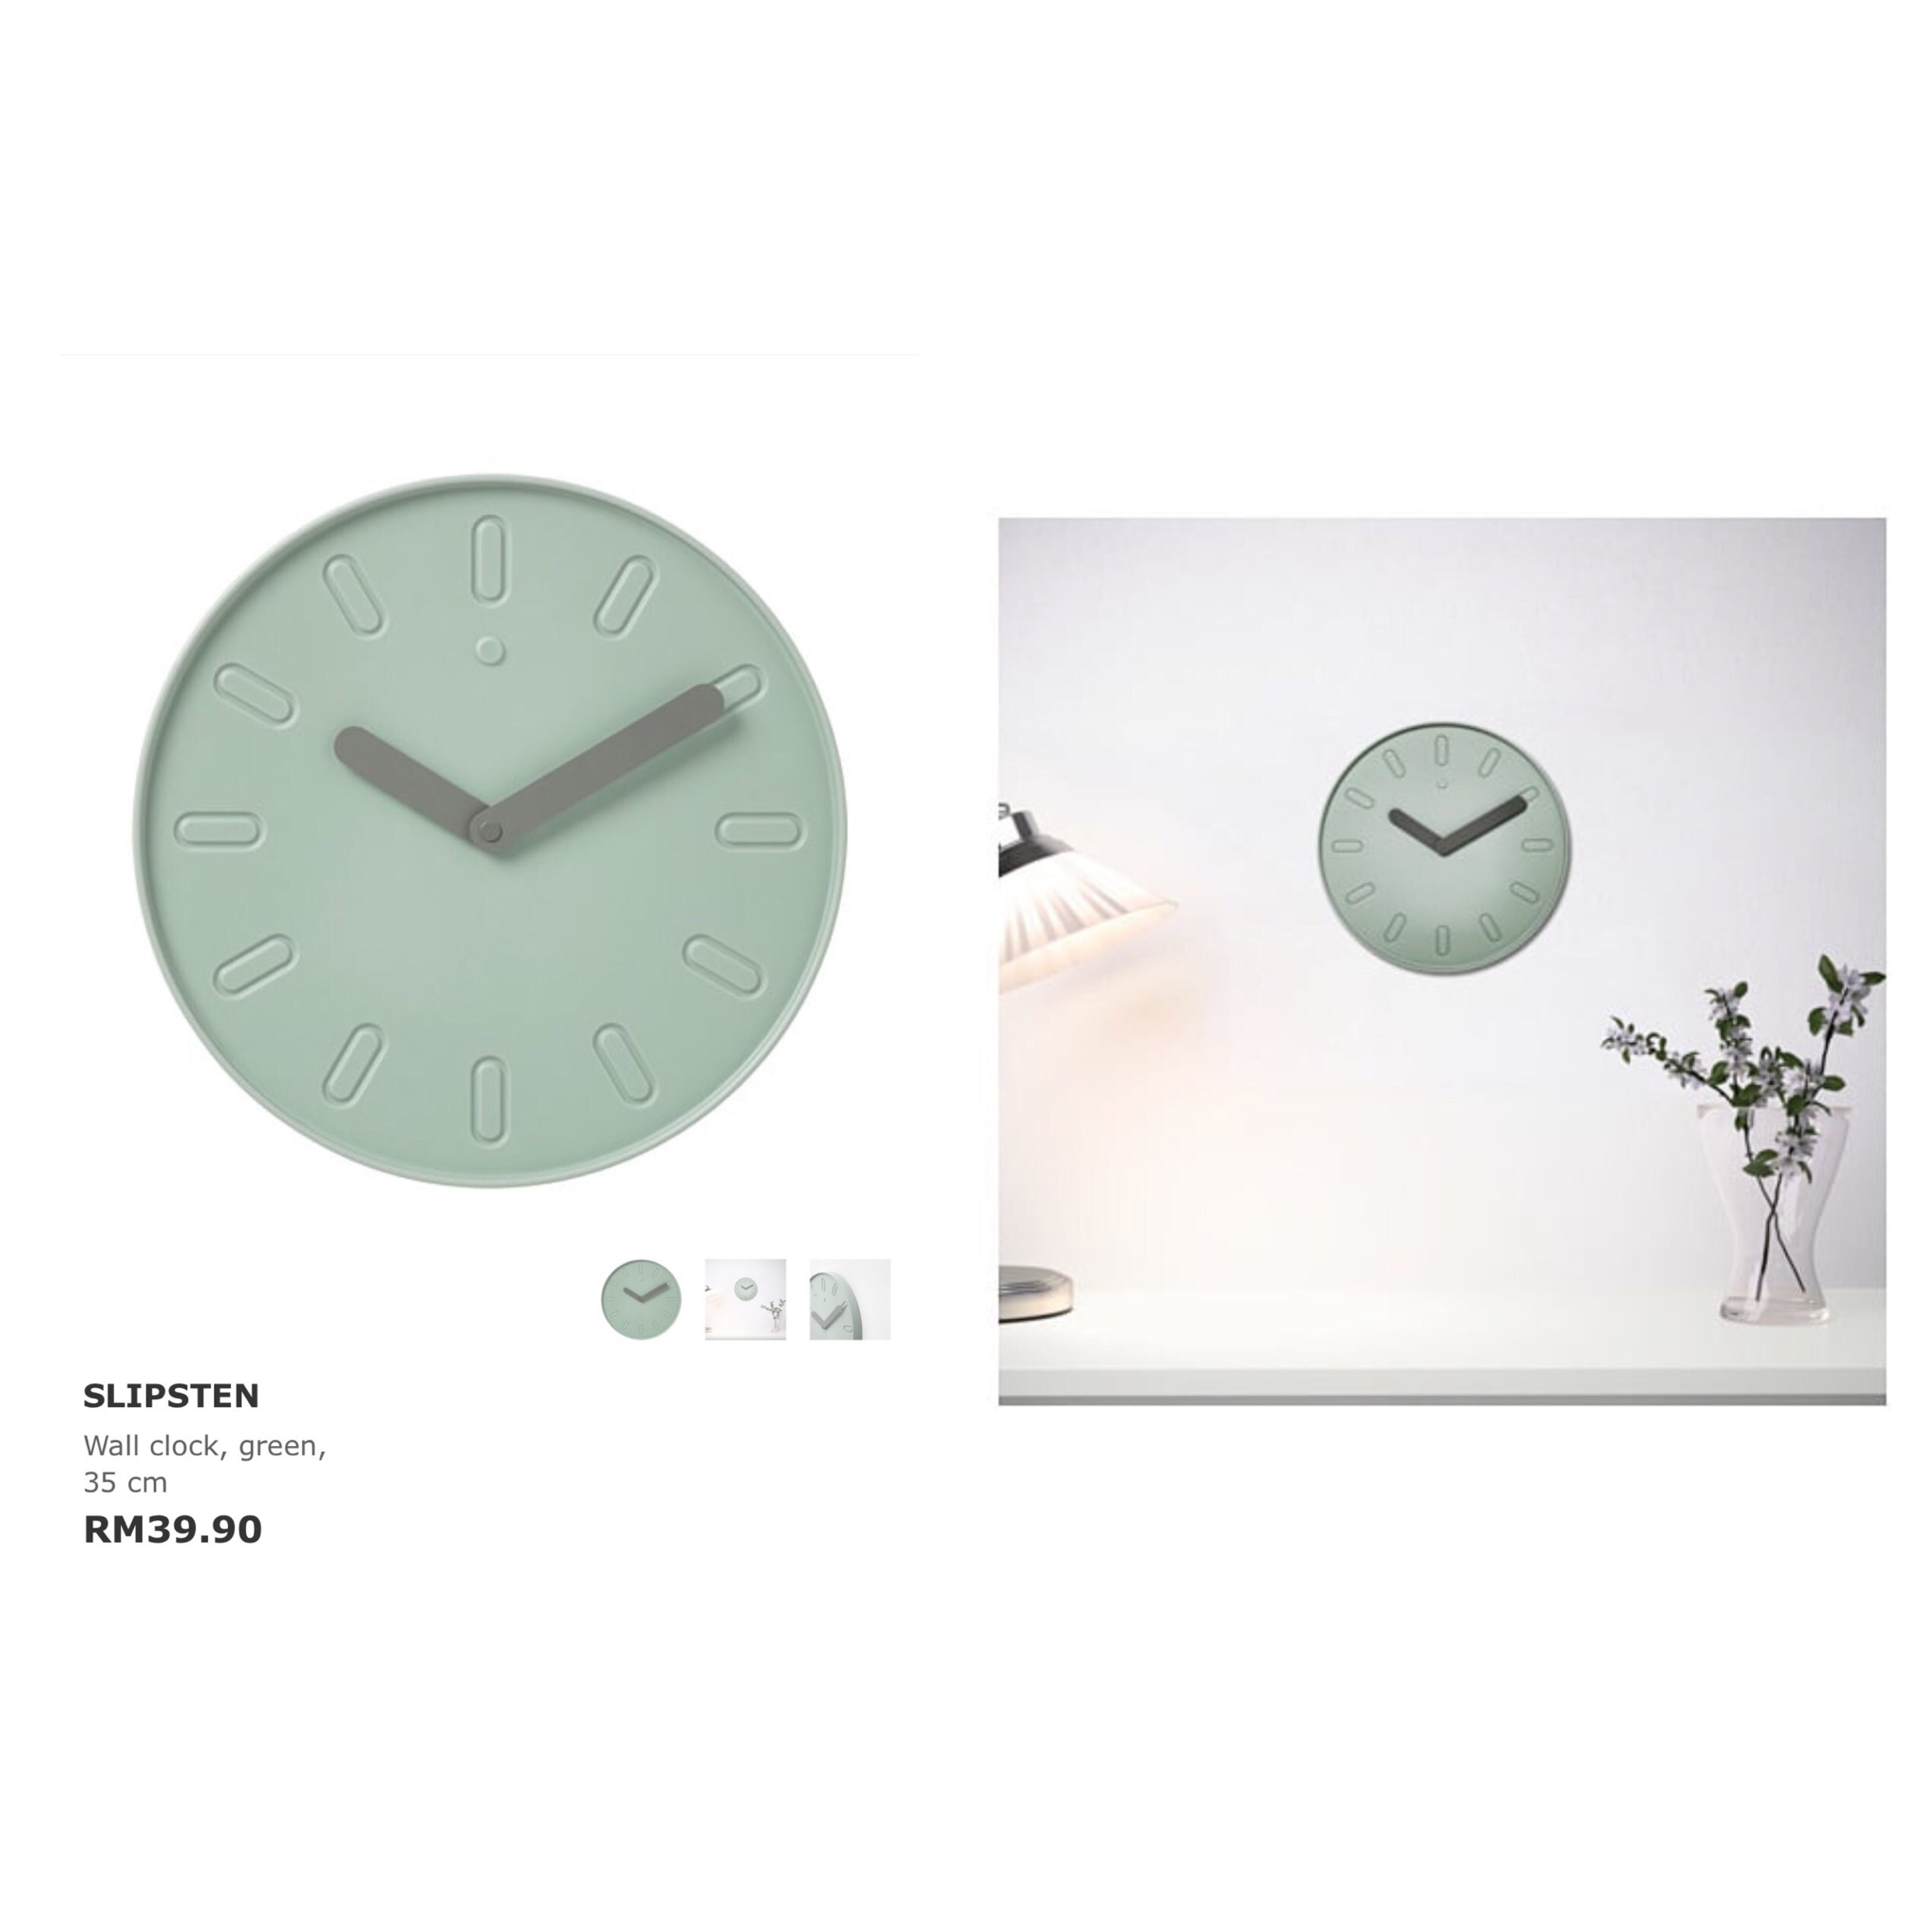 Ikea Slipsten Wall Clock Green 35cm Rumah Perabot Home